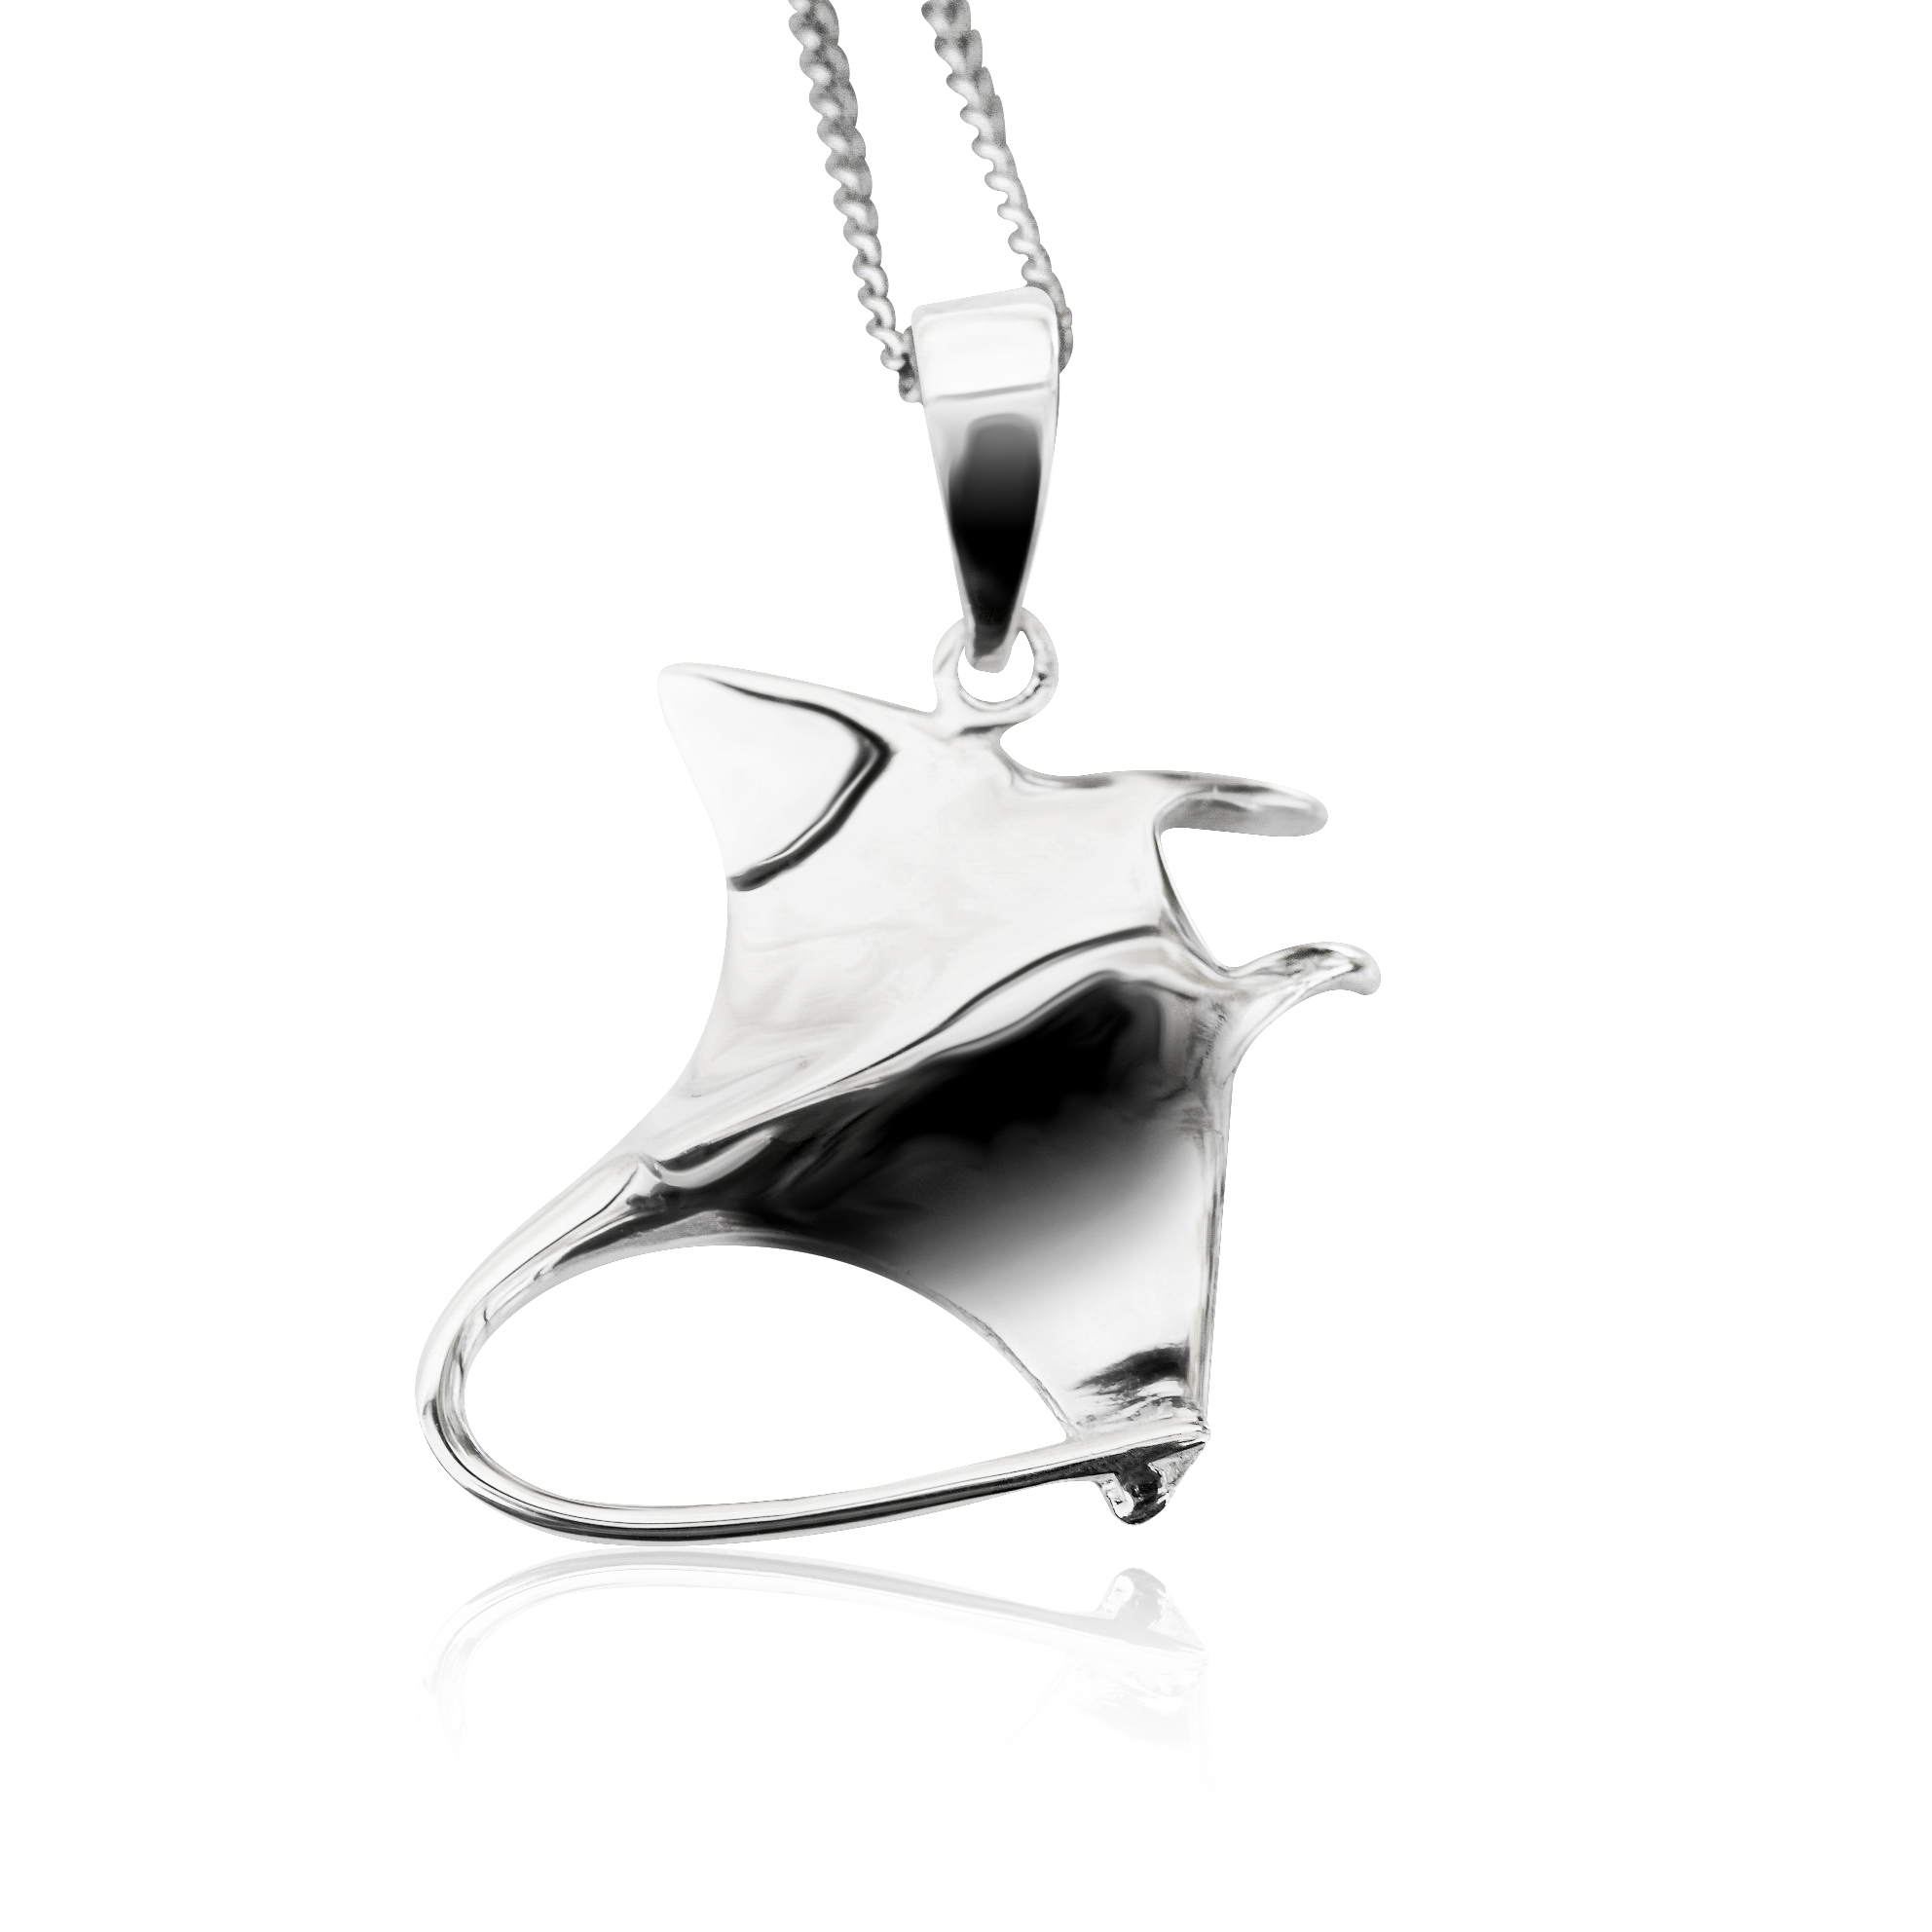 whale shark sea glass necklace